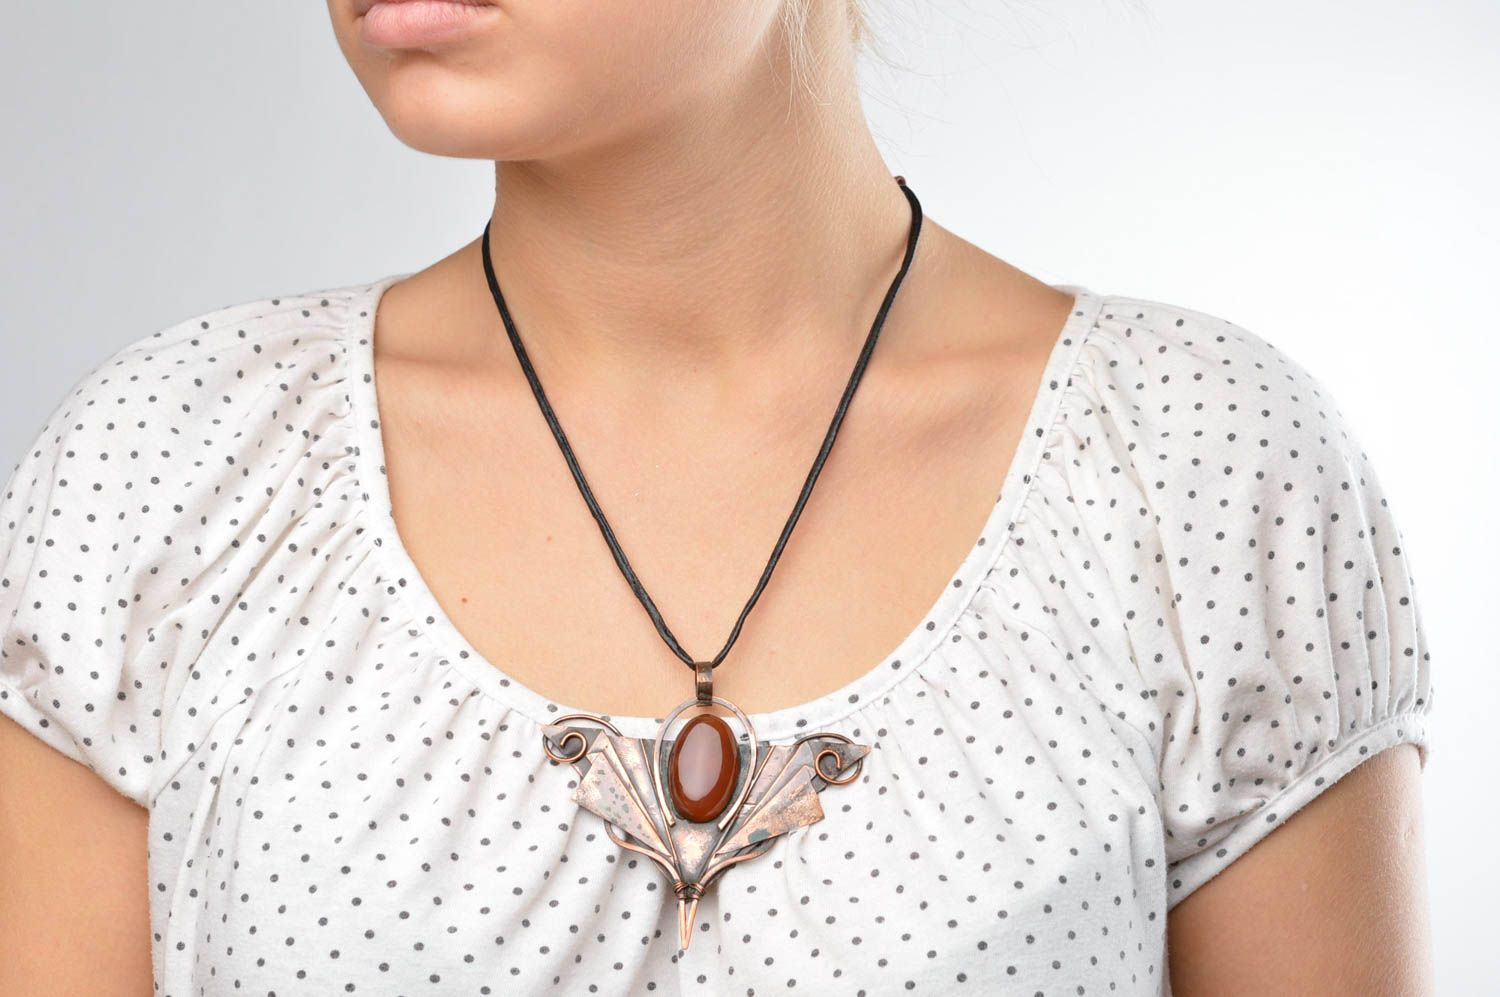 Unusual handmade neck pendant gemstone pendant metal pendant necklace design photo 2